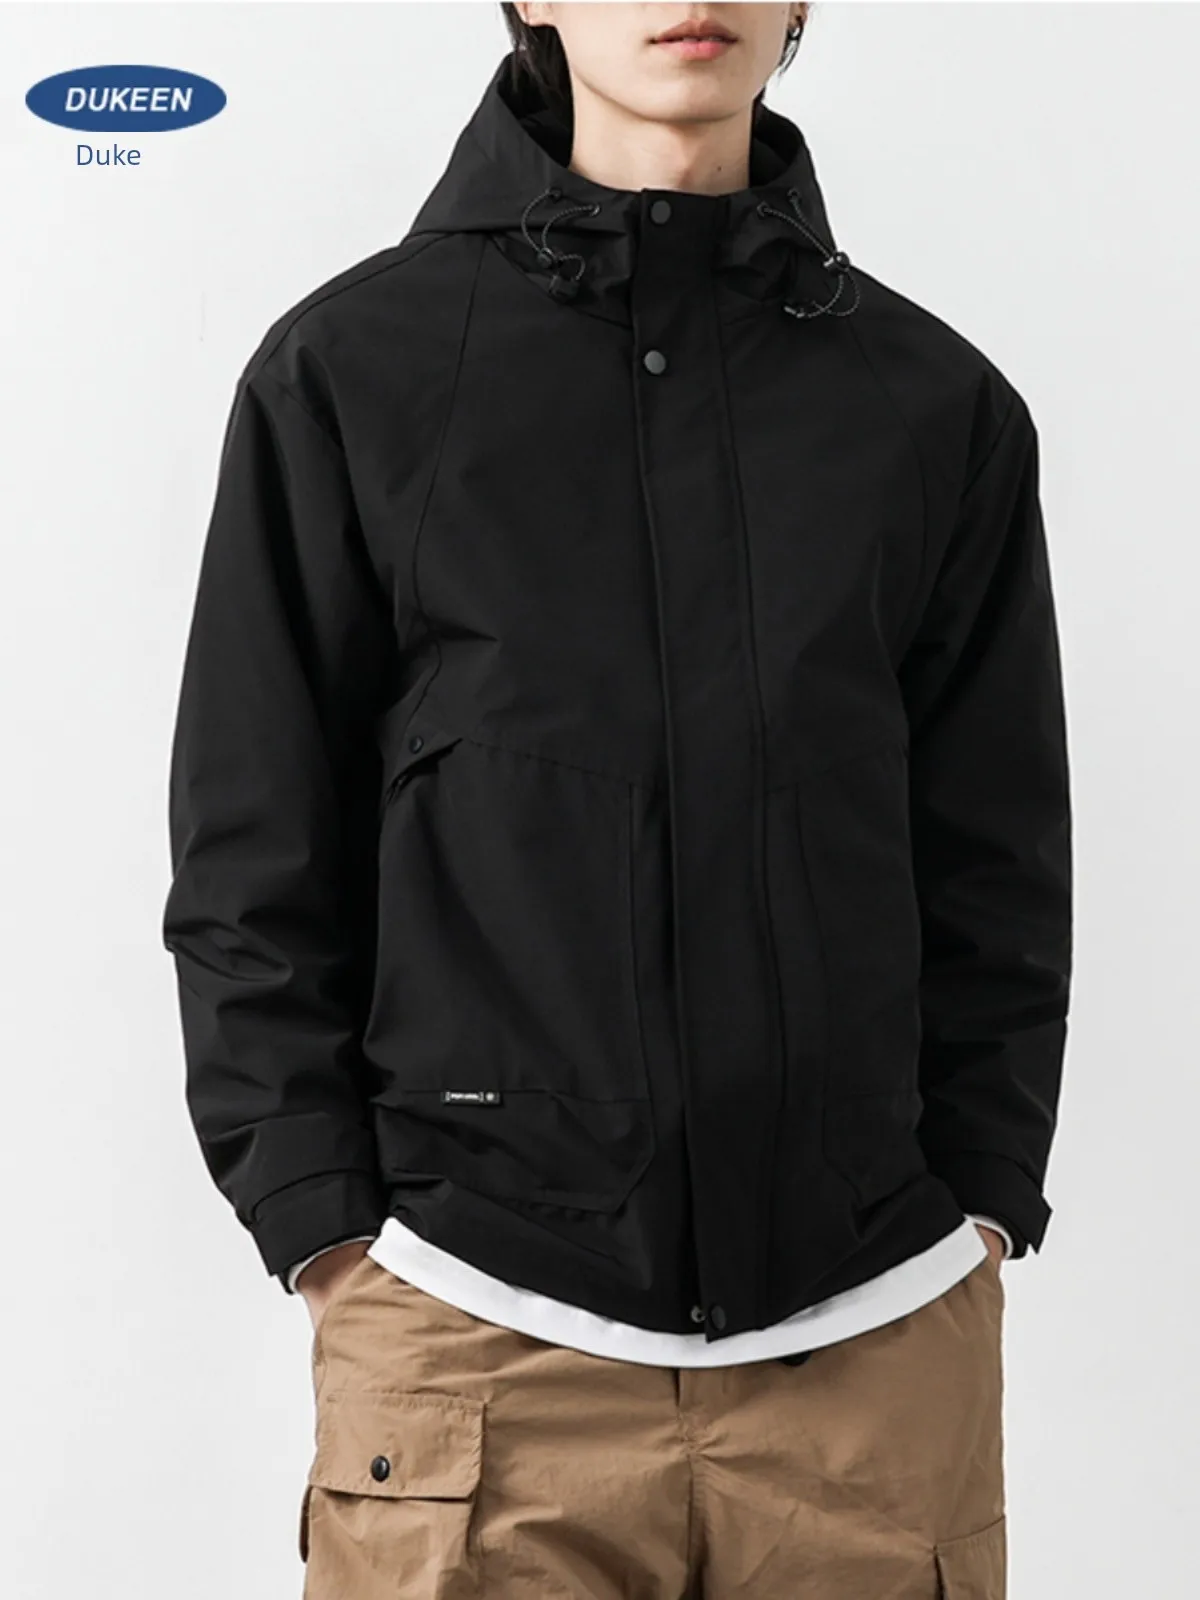 

EN American OutdOOr Work Suit Jacket, Men's Spring And Autumn HigH Street Windproof Black Warrior Functional Hooded Jacket